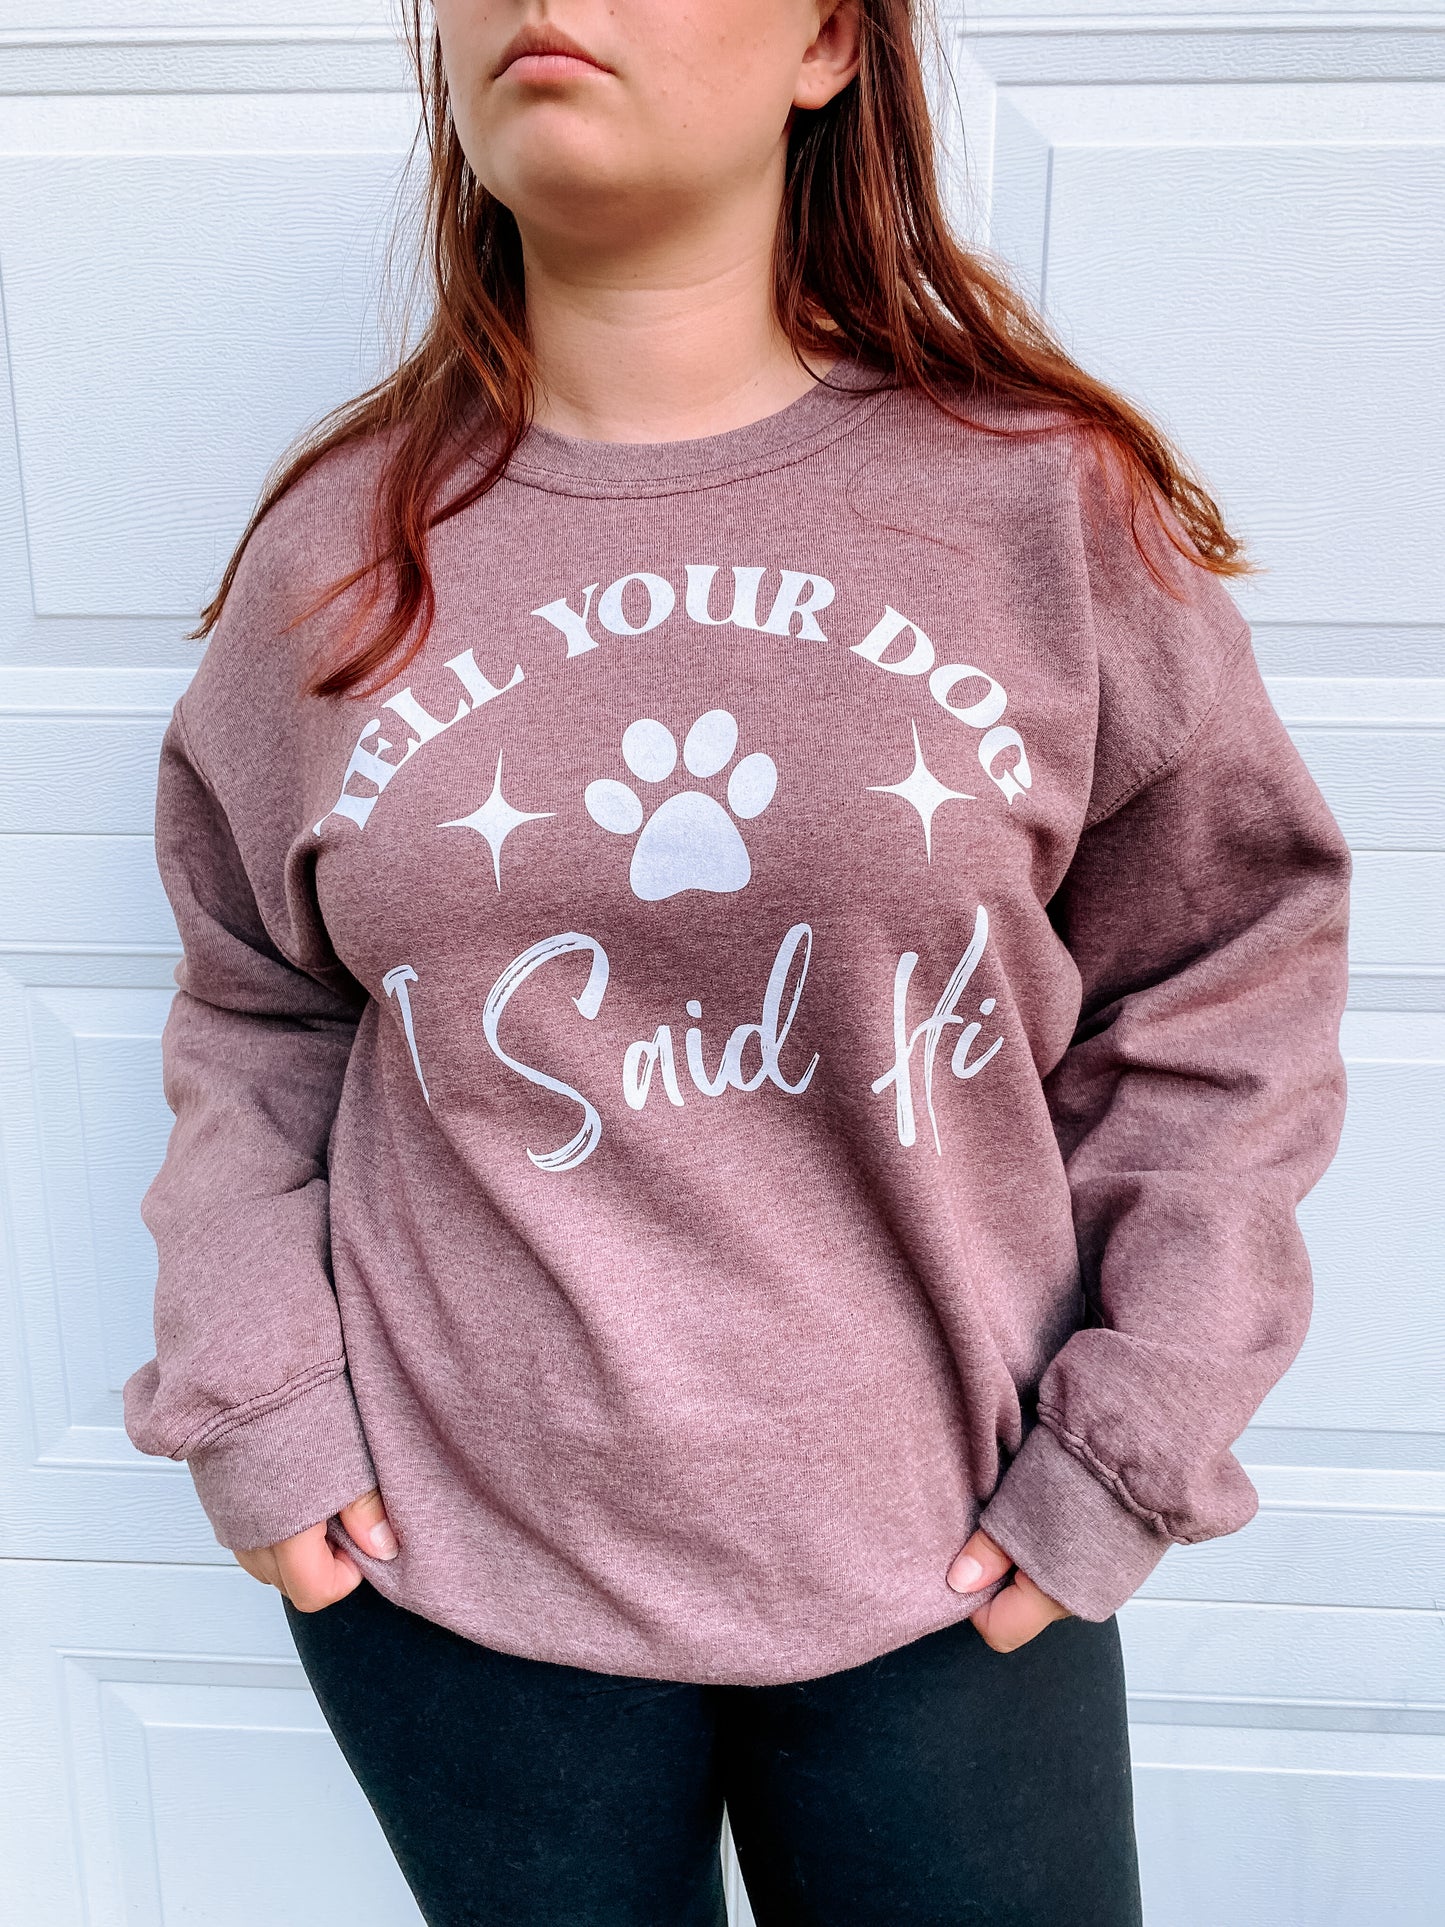 "Tell Your Dog I Said Hi" Sweatshirt